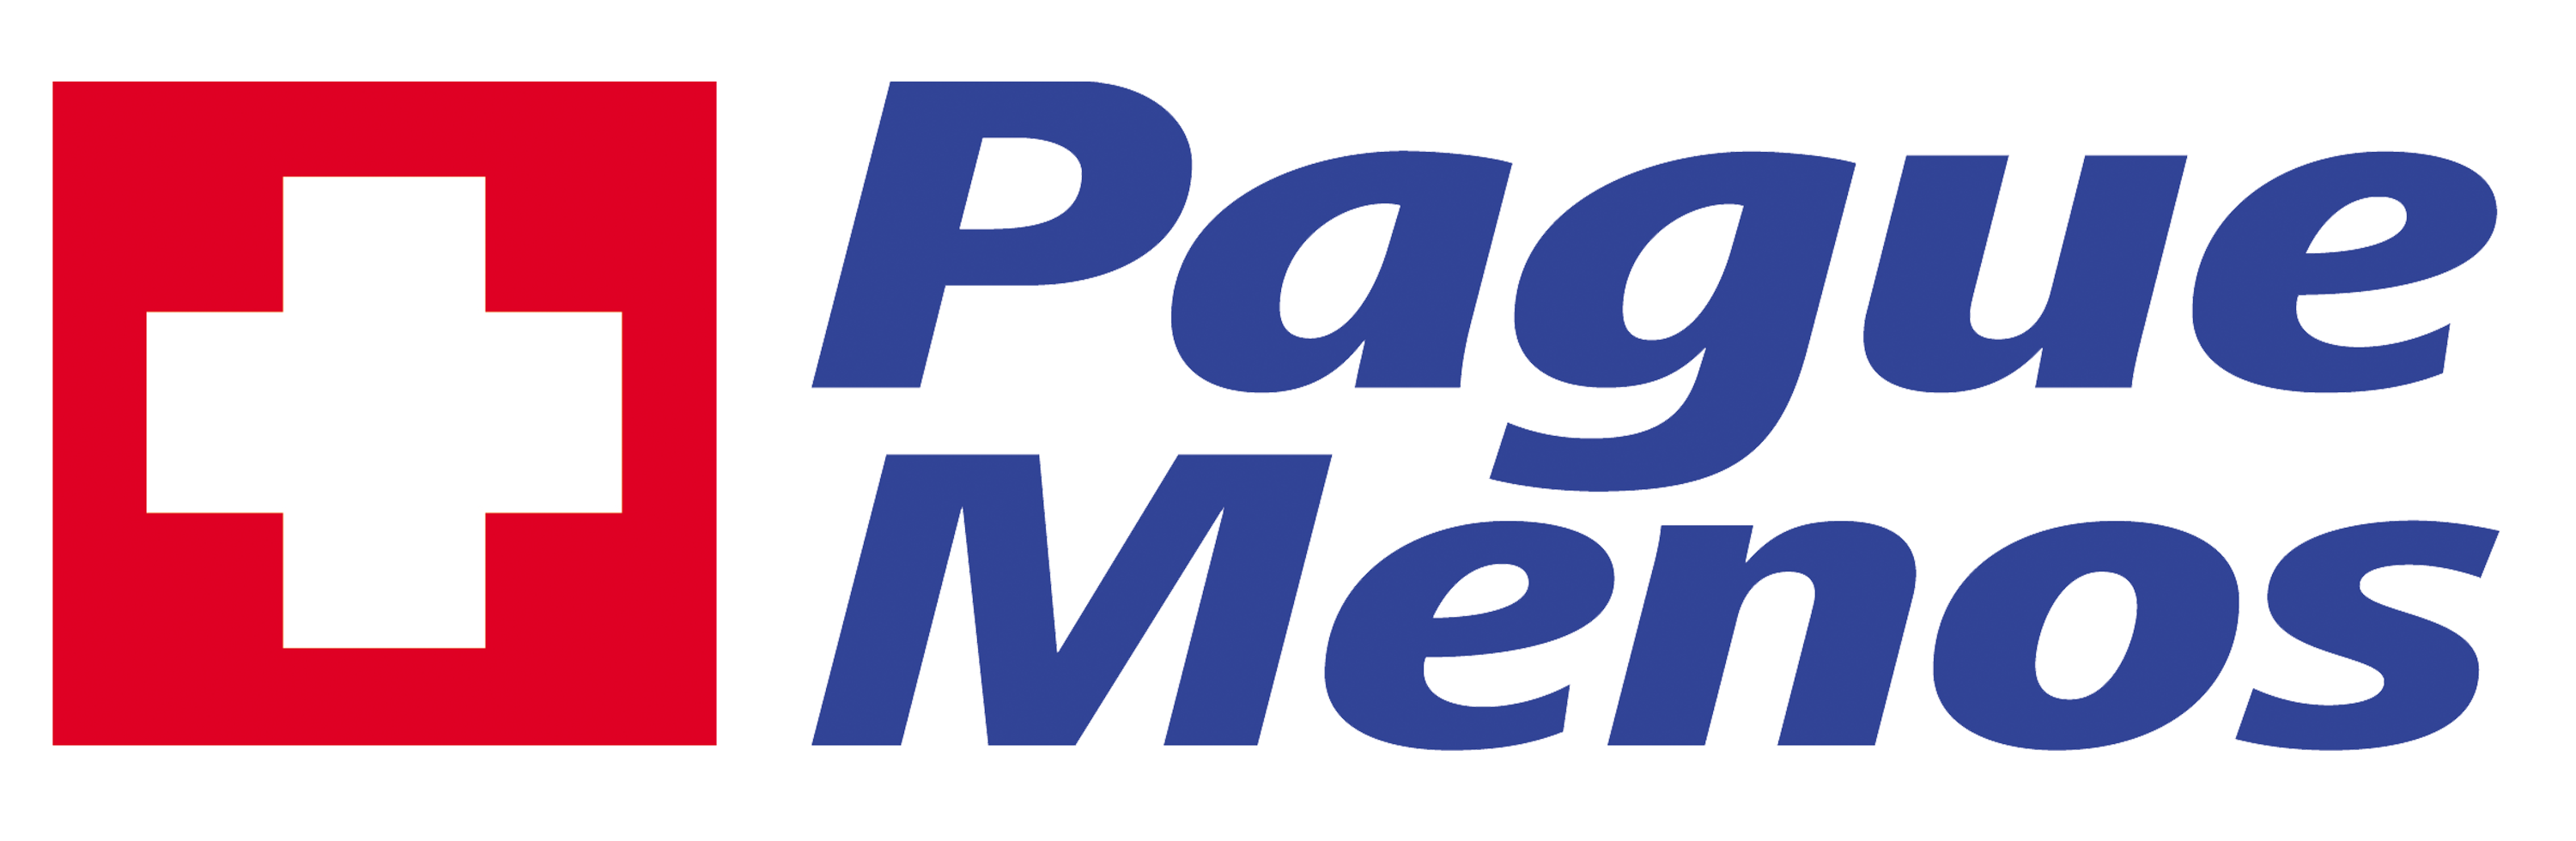 Farmacia Pague Menos - Vila Gloria - MS